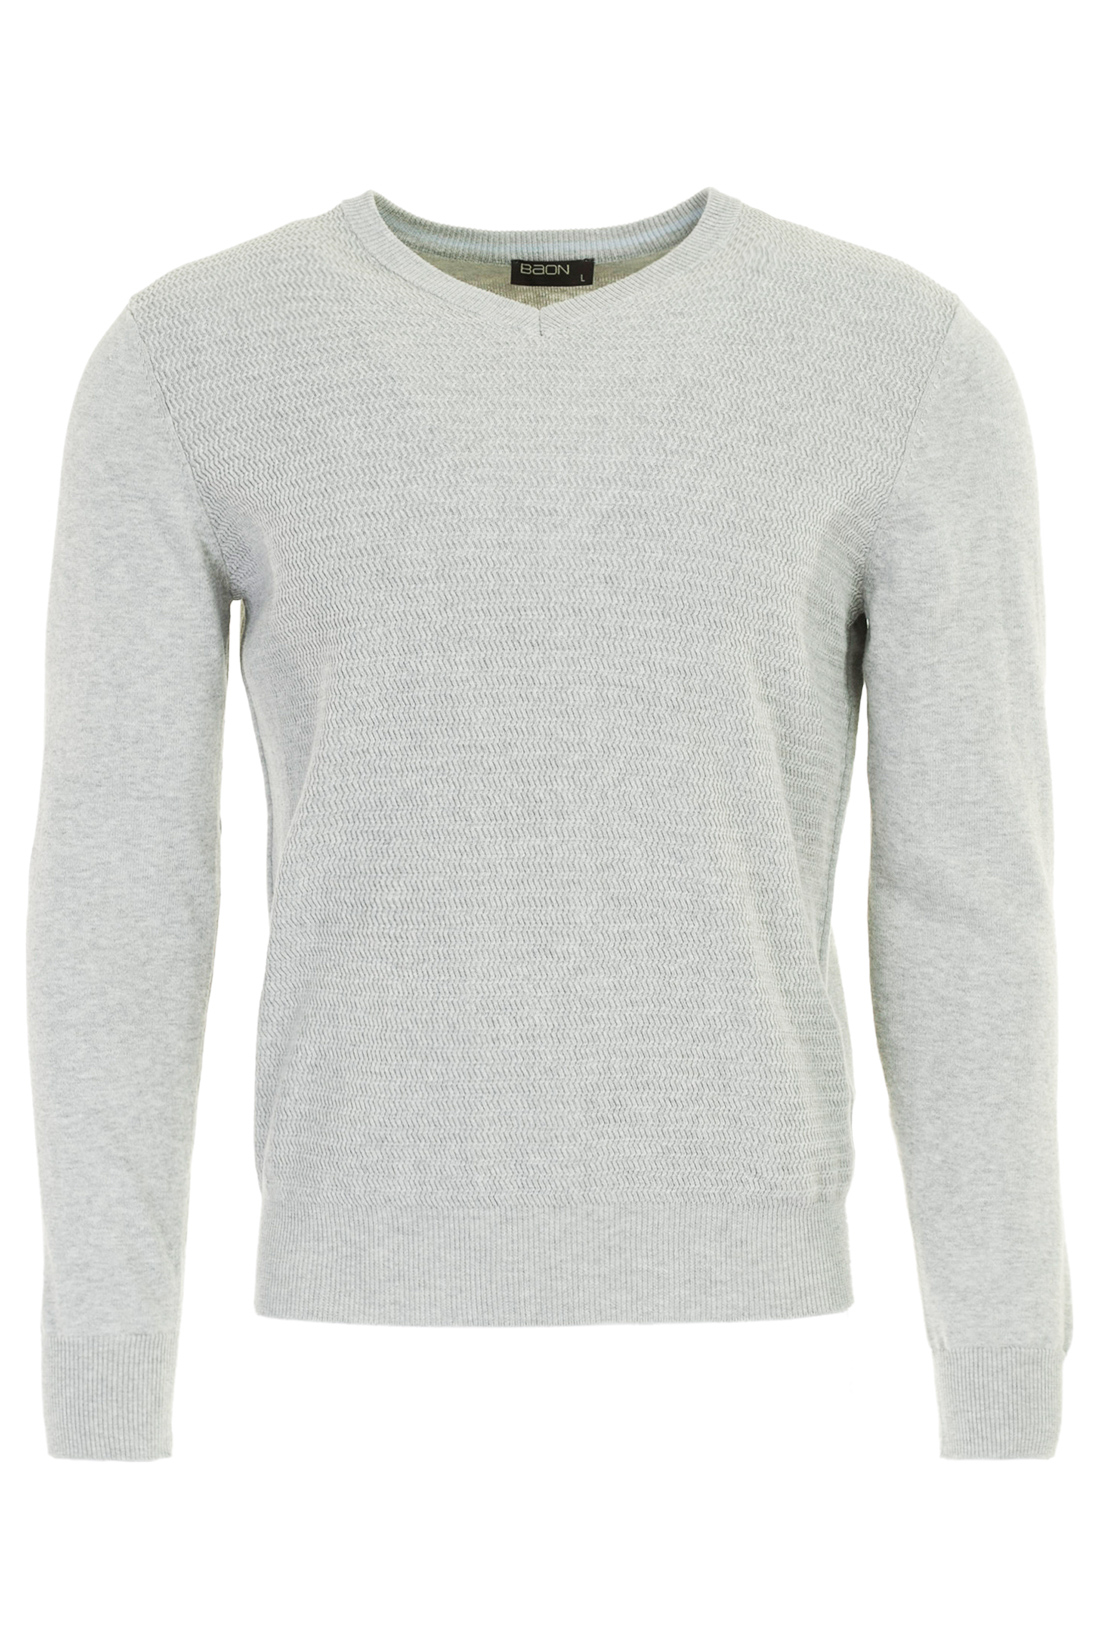 Пуловер с рельефным узором (арт. baon B637016), размер XXL, цвет silver melange#серый Пуловер с рельефным узором (арт. baon B637016) - фото 5